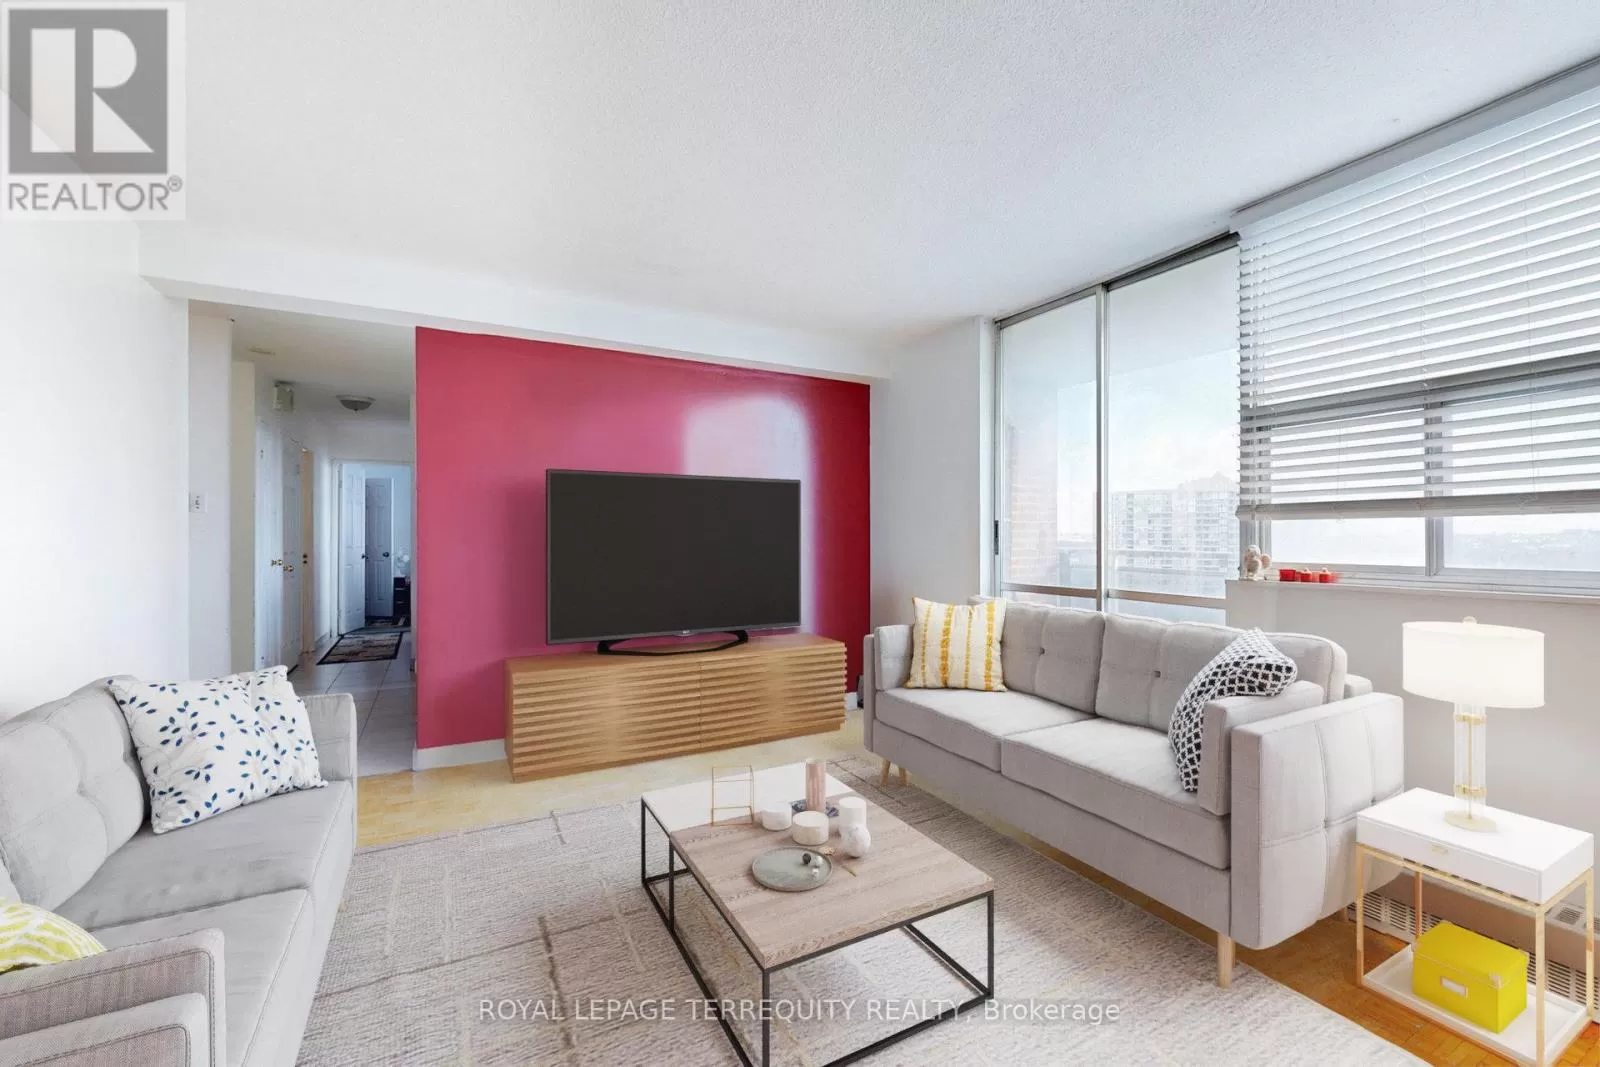 Apartment for rent: 1102 - 2645 Kipling Avenue, Toronto, Ontario M9V 3S6